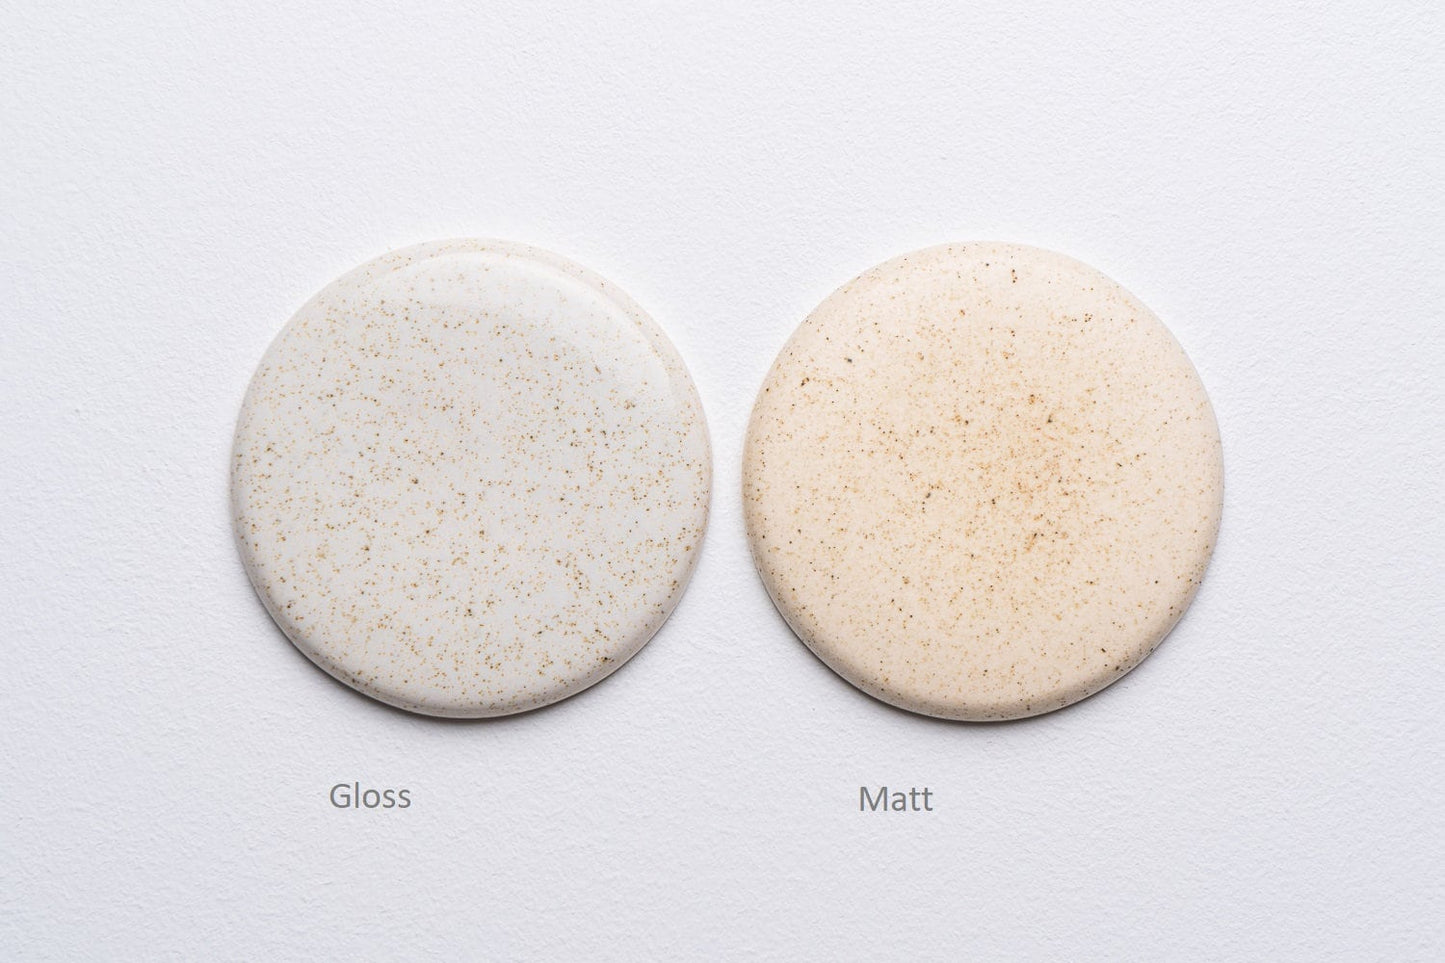 Small Speckled Cream Matt Element Pendant Light in Ceramic and Brass/Nickel by StudioHaran